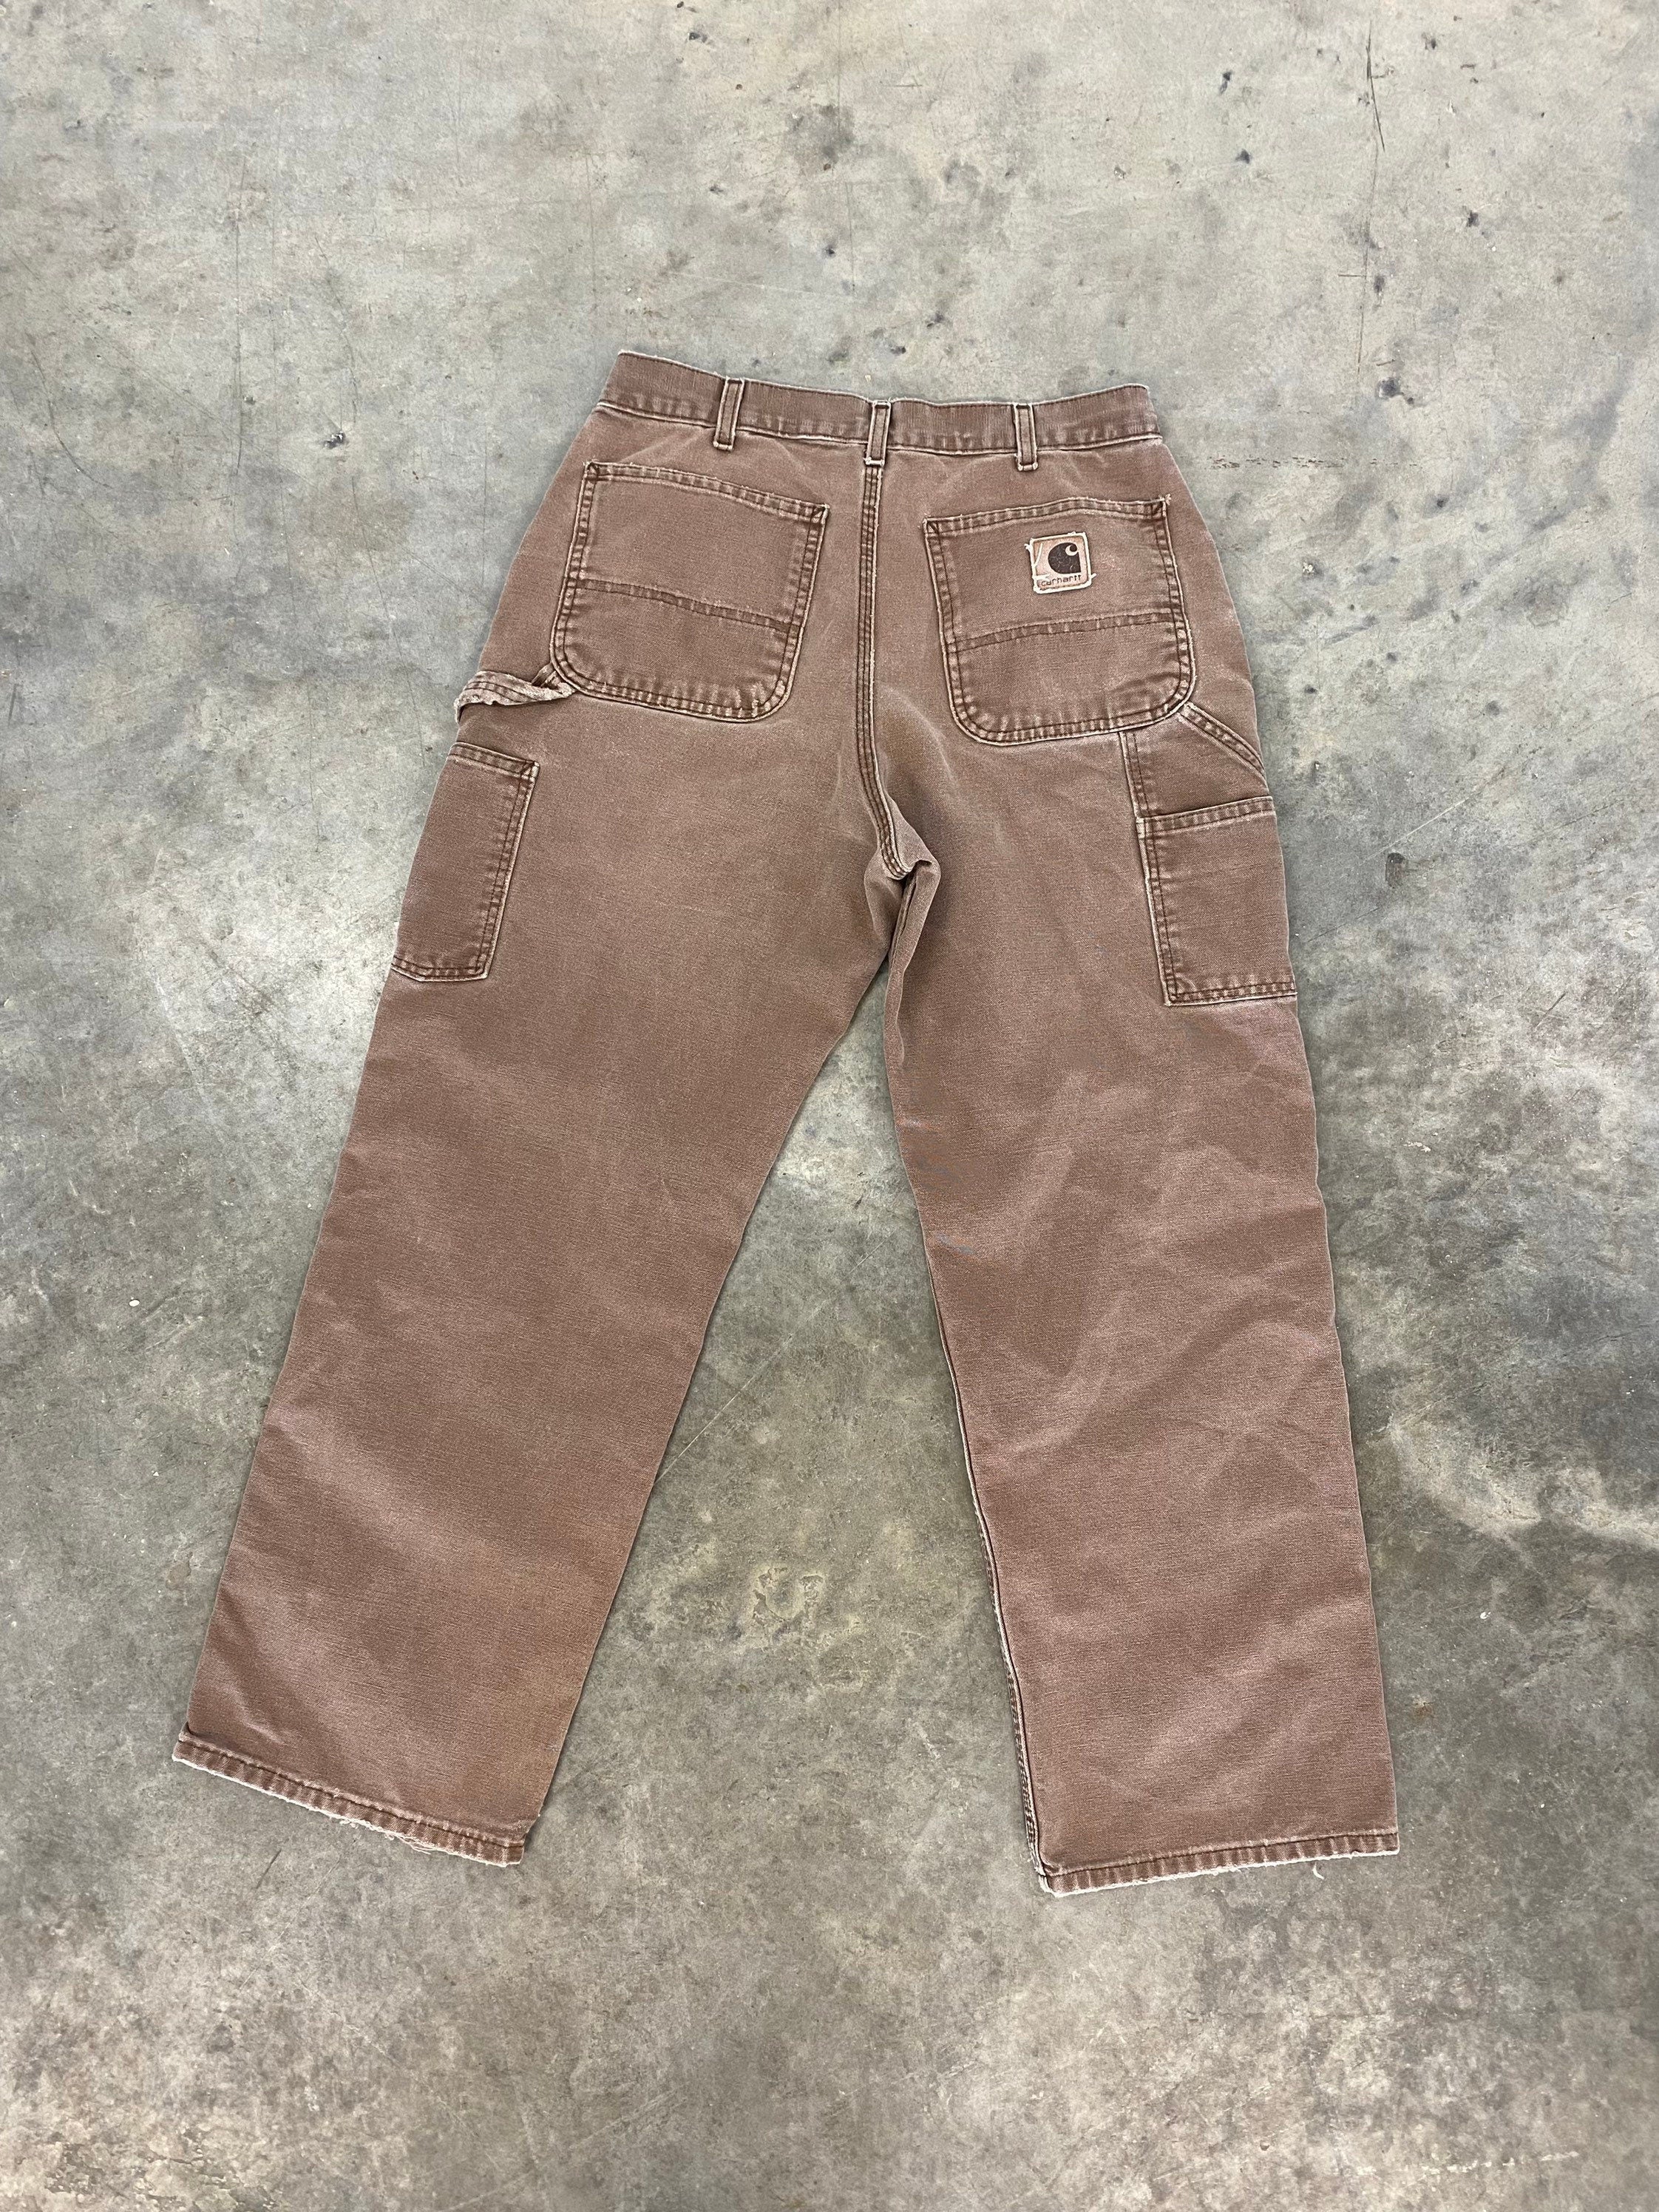 Vintage Carhartt pants